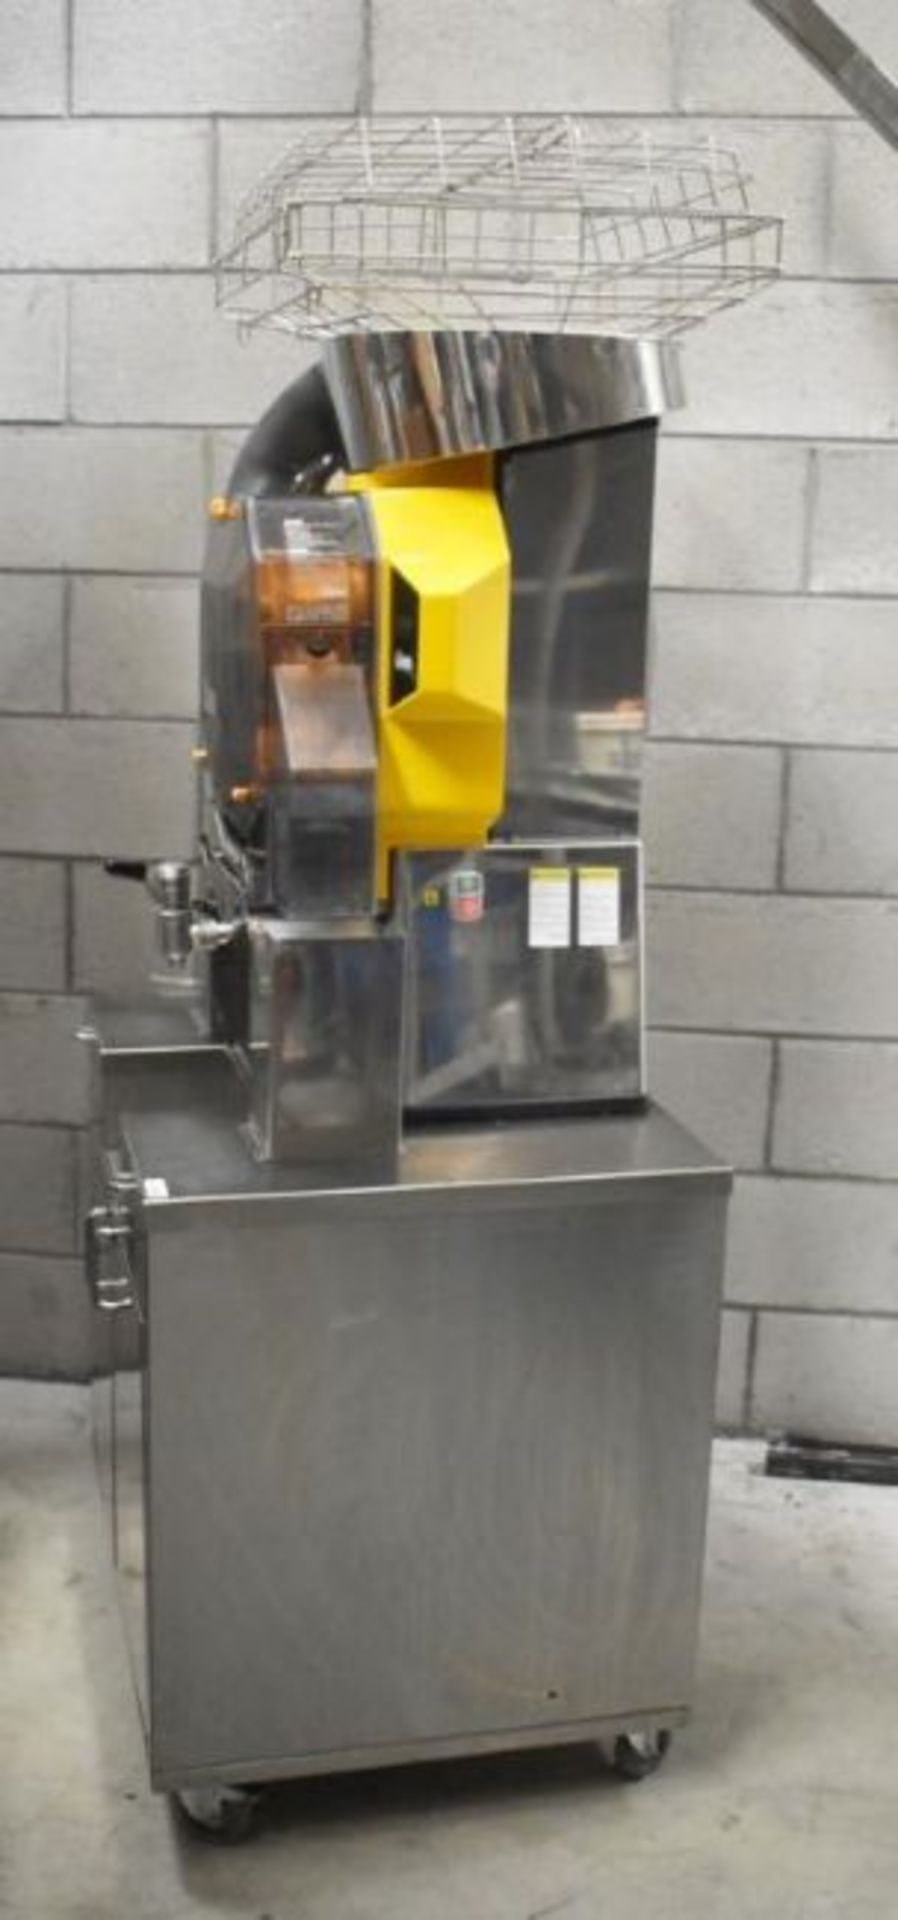 1 x Zumex Speed S +Plus Self-Service Podium Commercial Citrus Juicer - Manufactured in 2018 - - Image 19 of 20